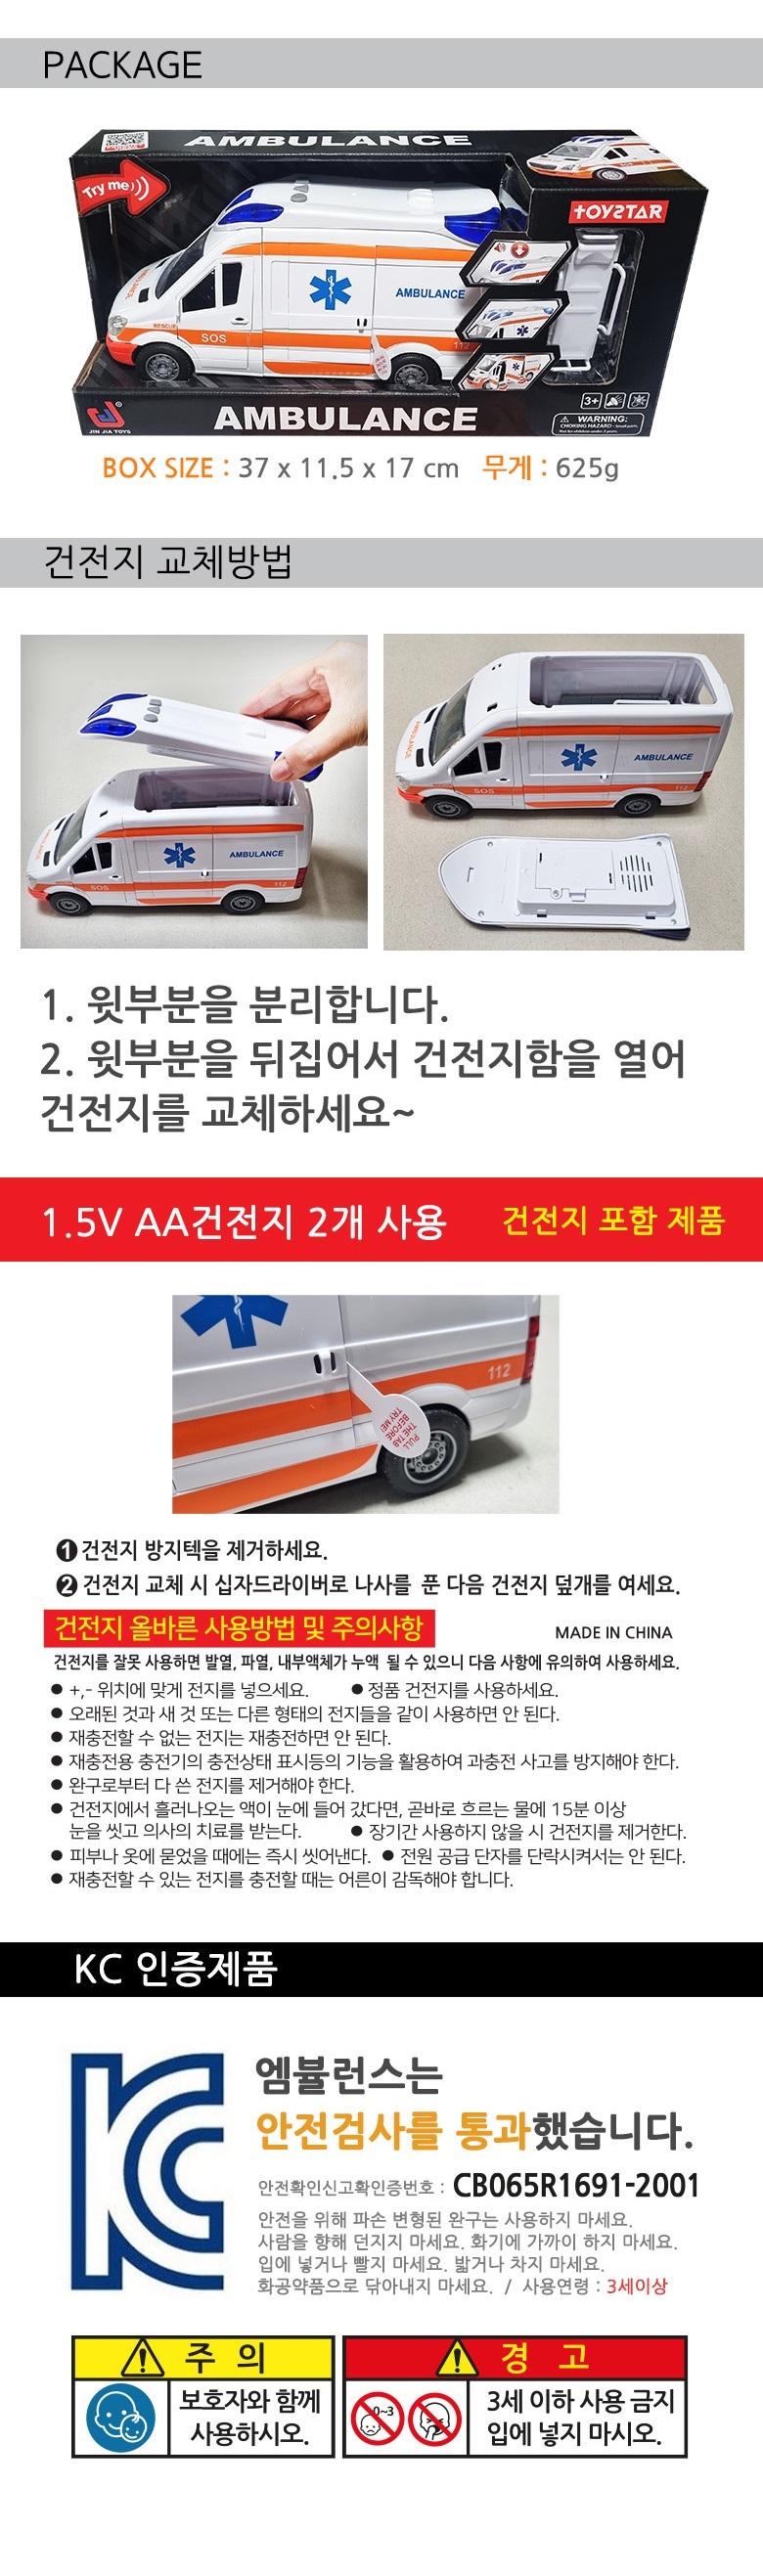 ambulance25000_3.jpg